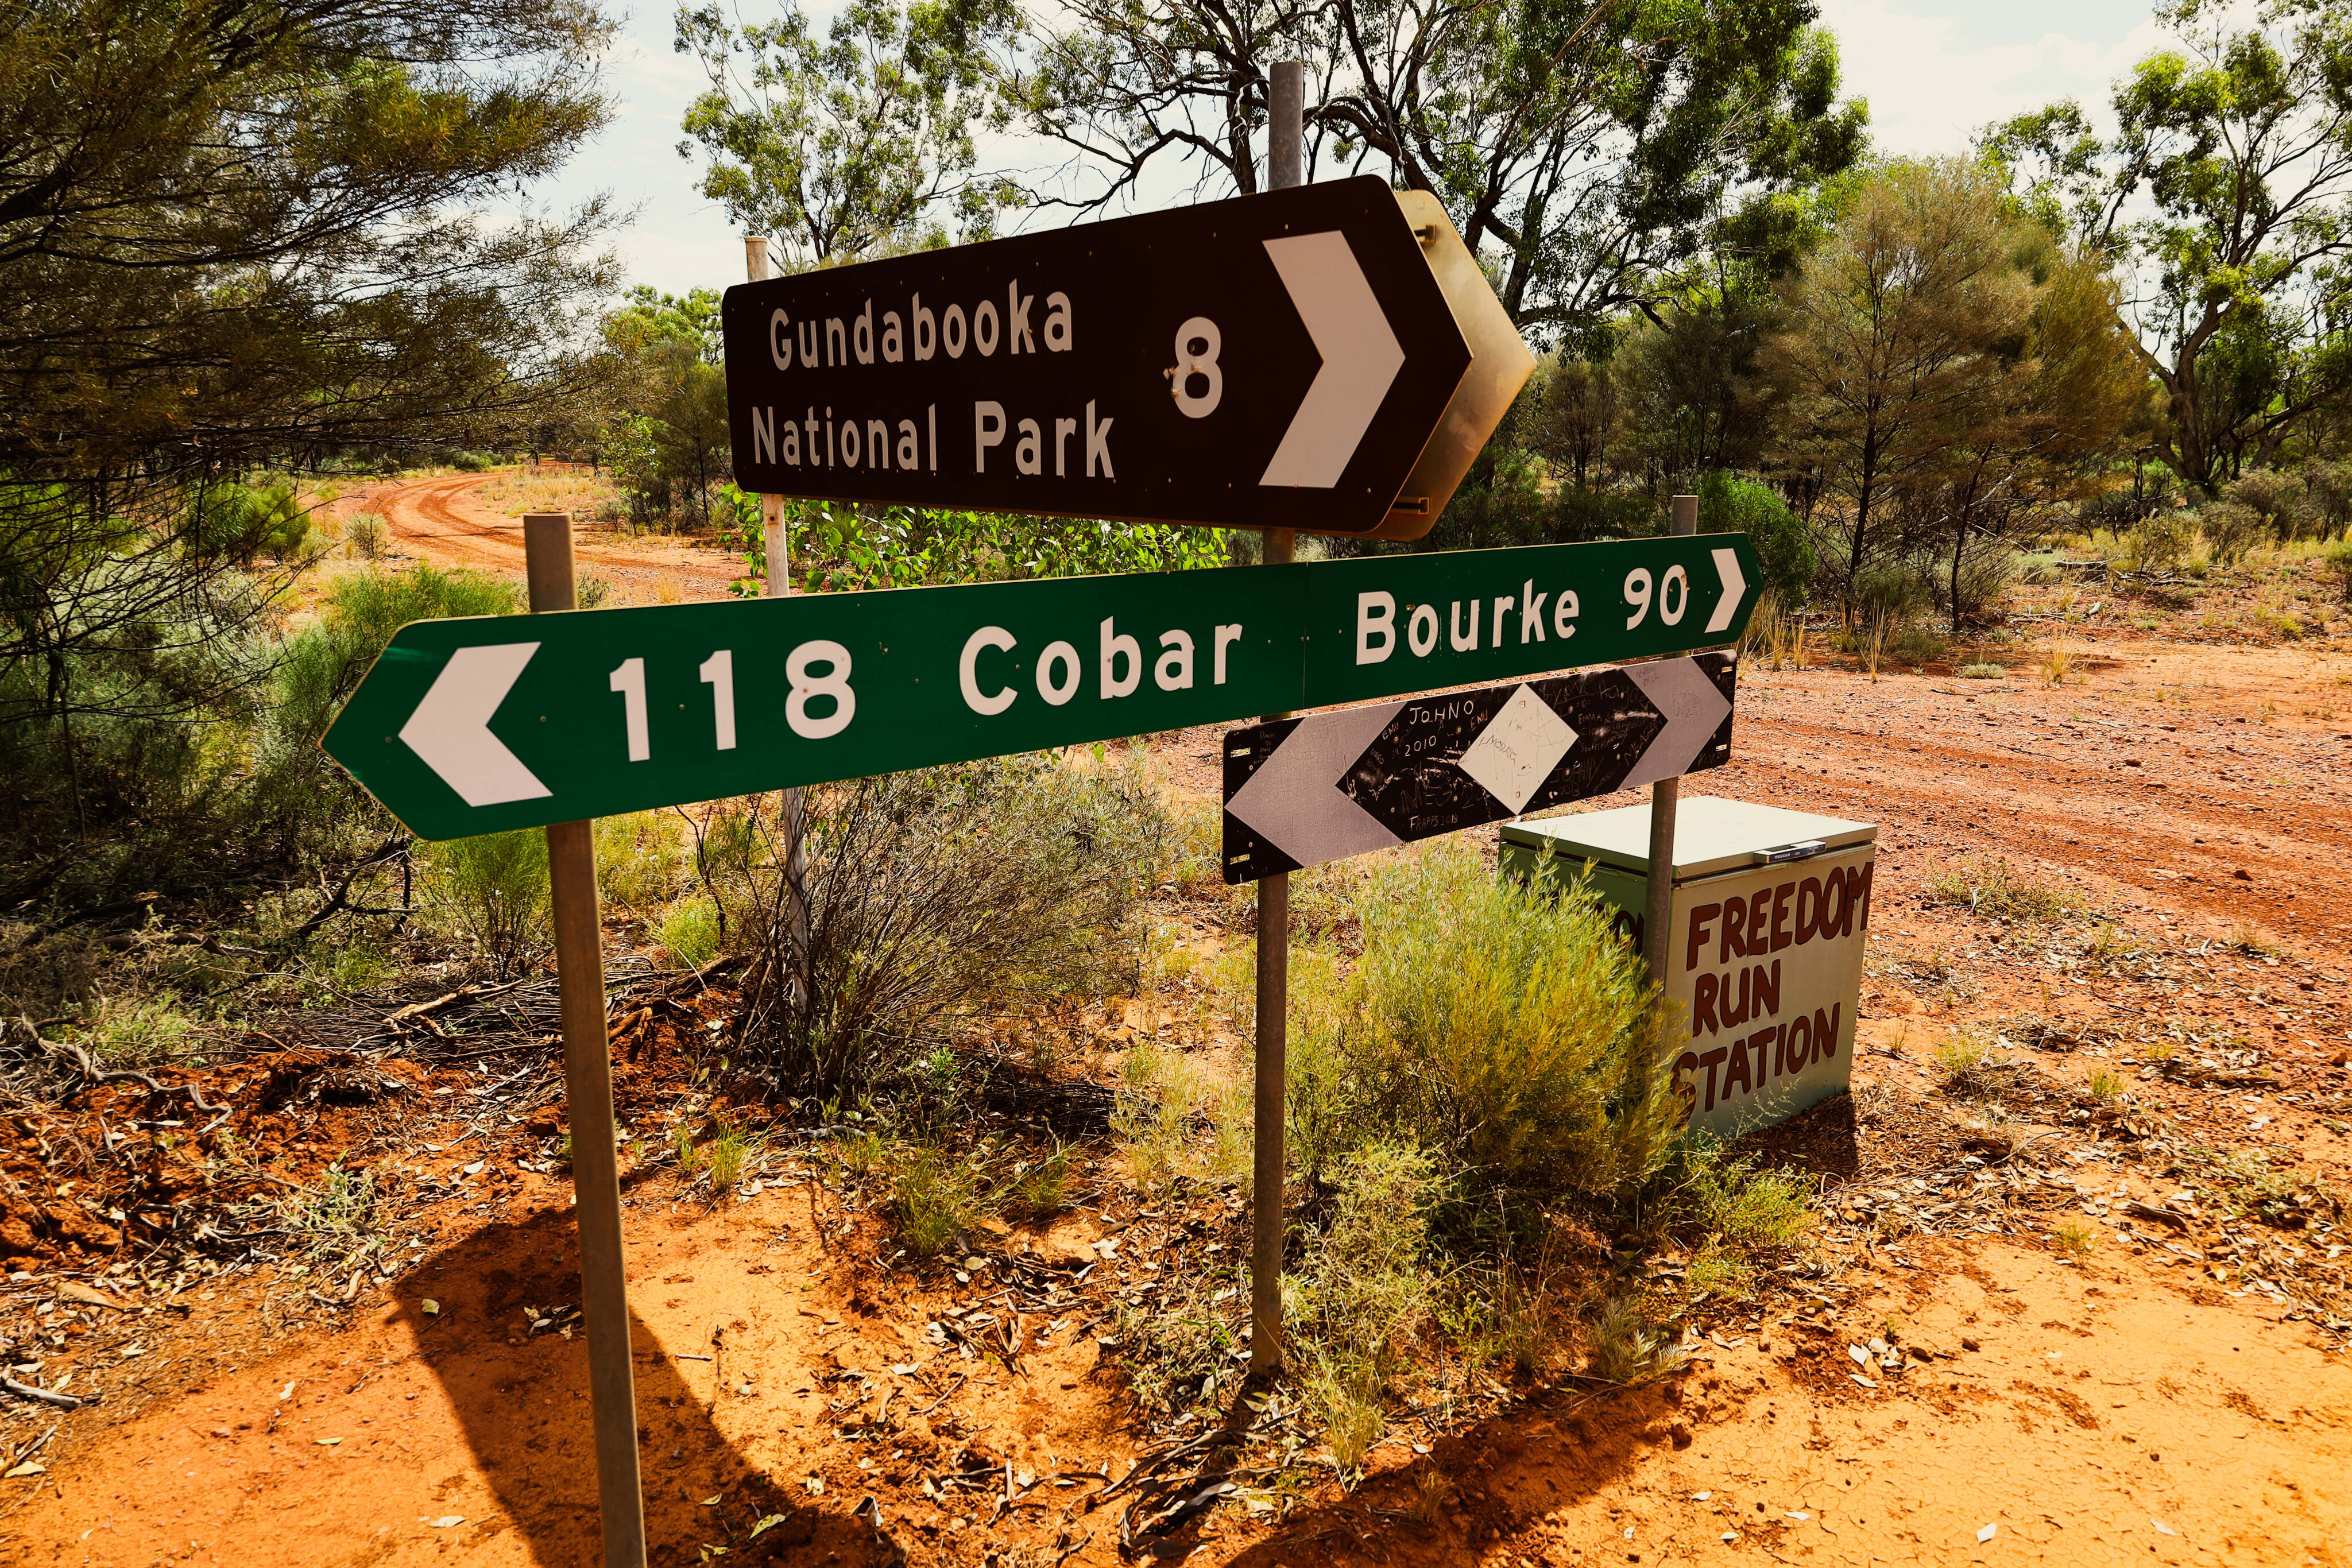 8aae188c/4x4 australia explore gundabooka nsw signs jpg